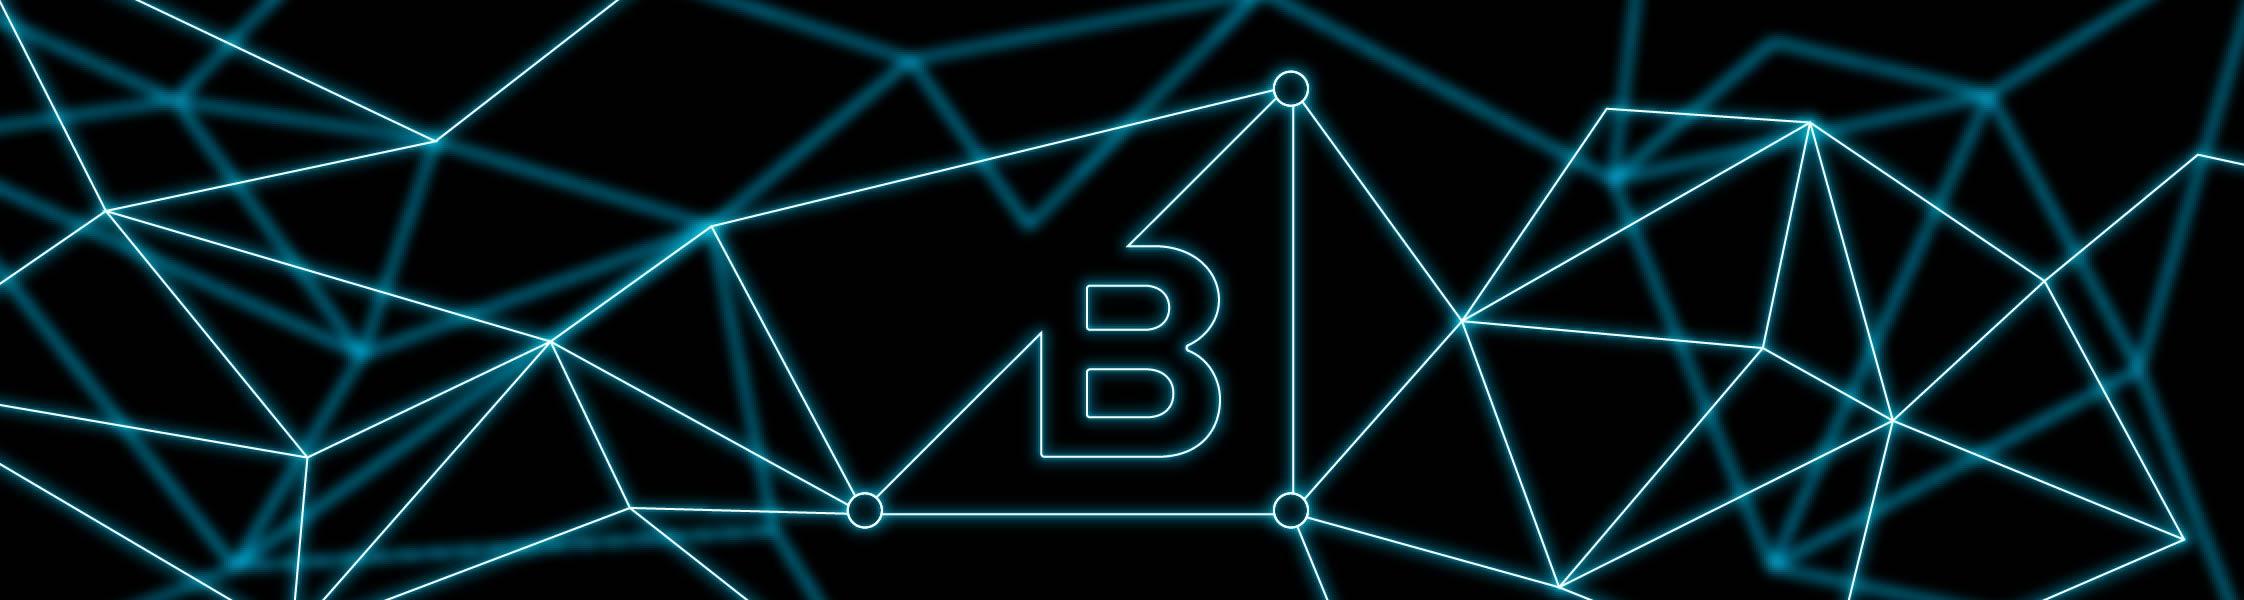 Article header b logo triangle digital abstract